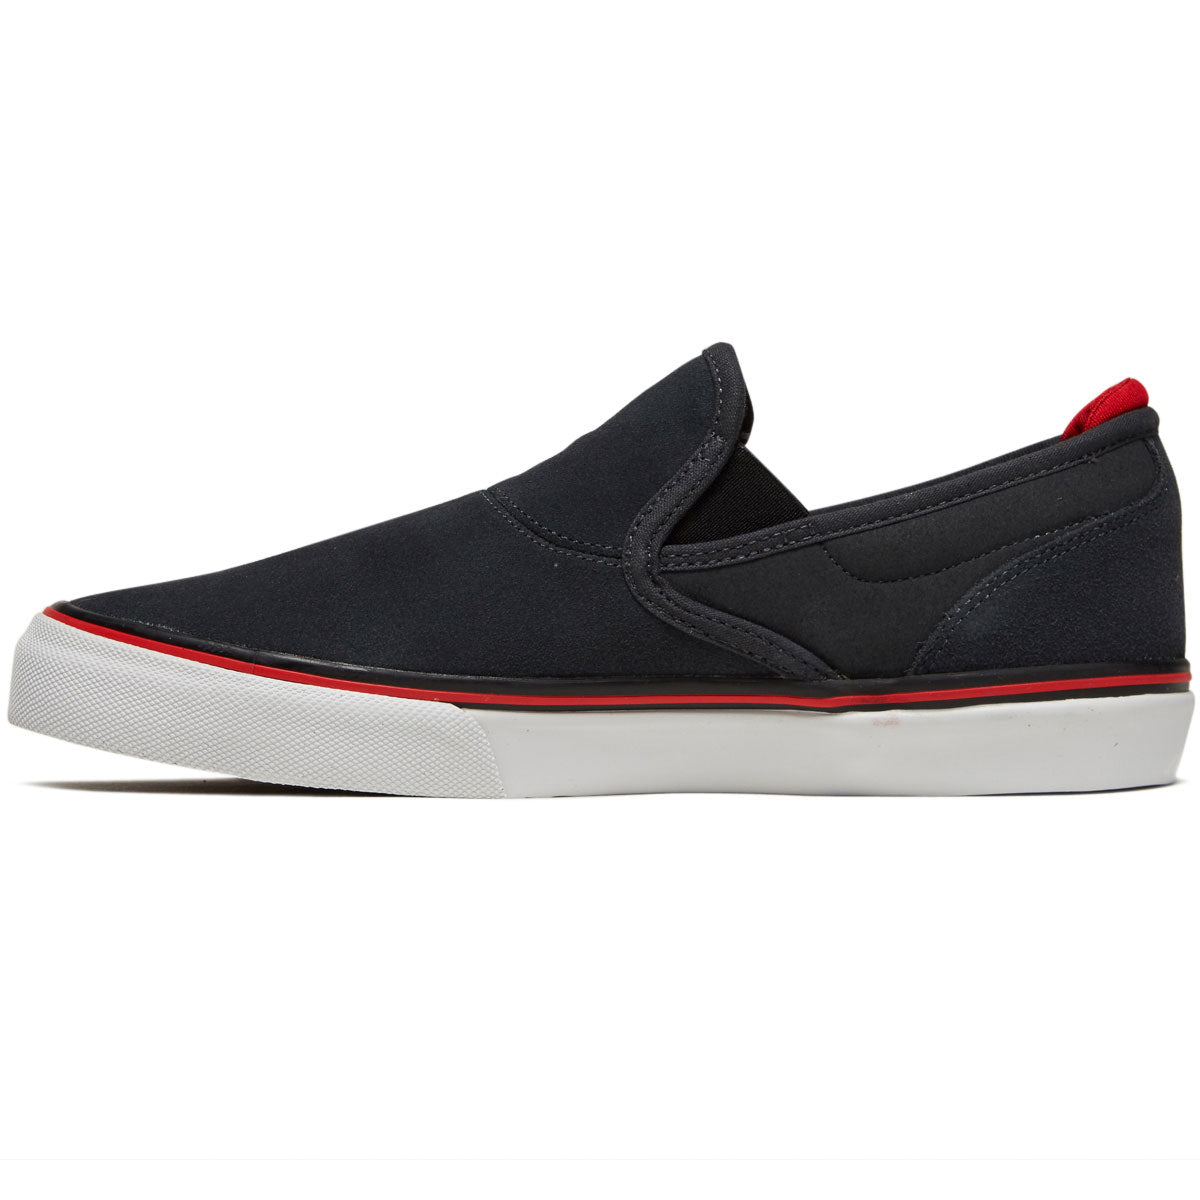 Emerica Wino G6 Slip-on Shoes - Dark Grey/Black/ Red image 2